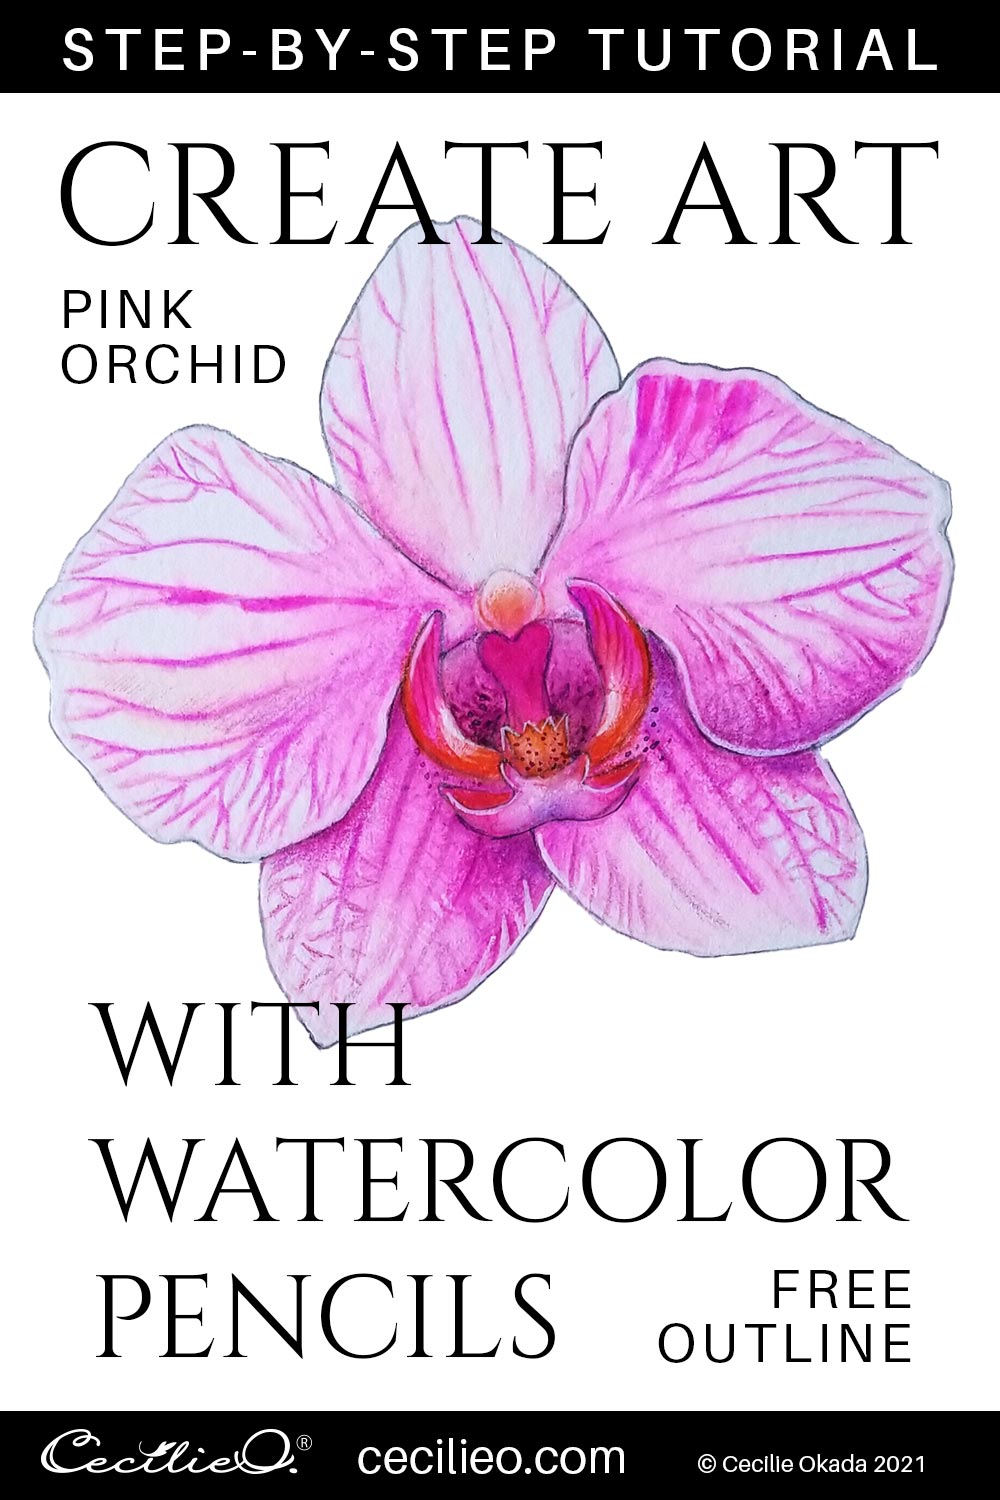 How to Use Watercolor Pencils - Watercolor Pencil Techniques